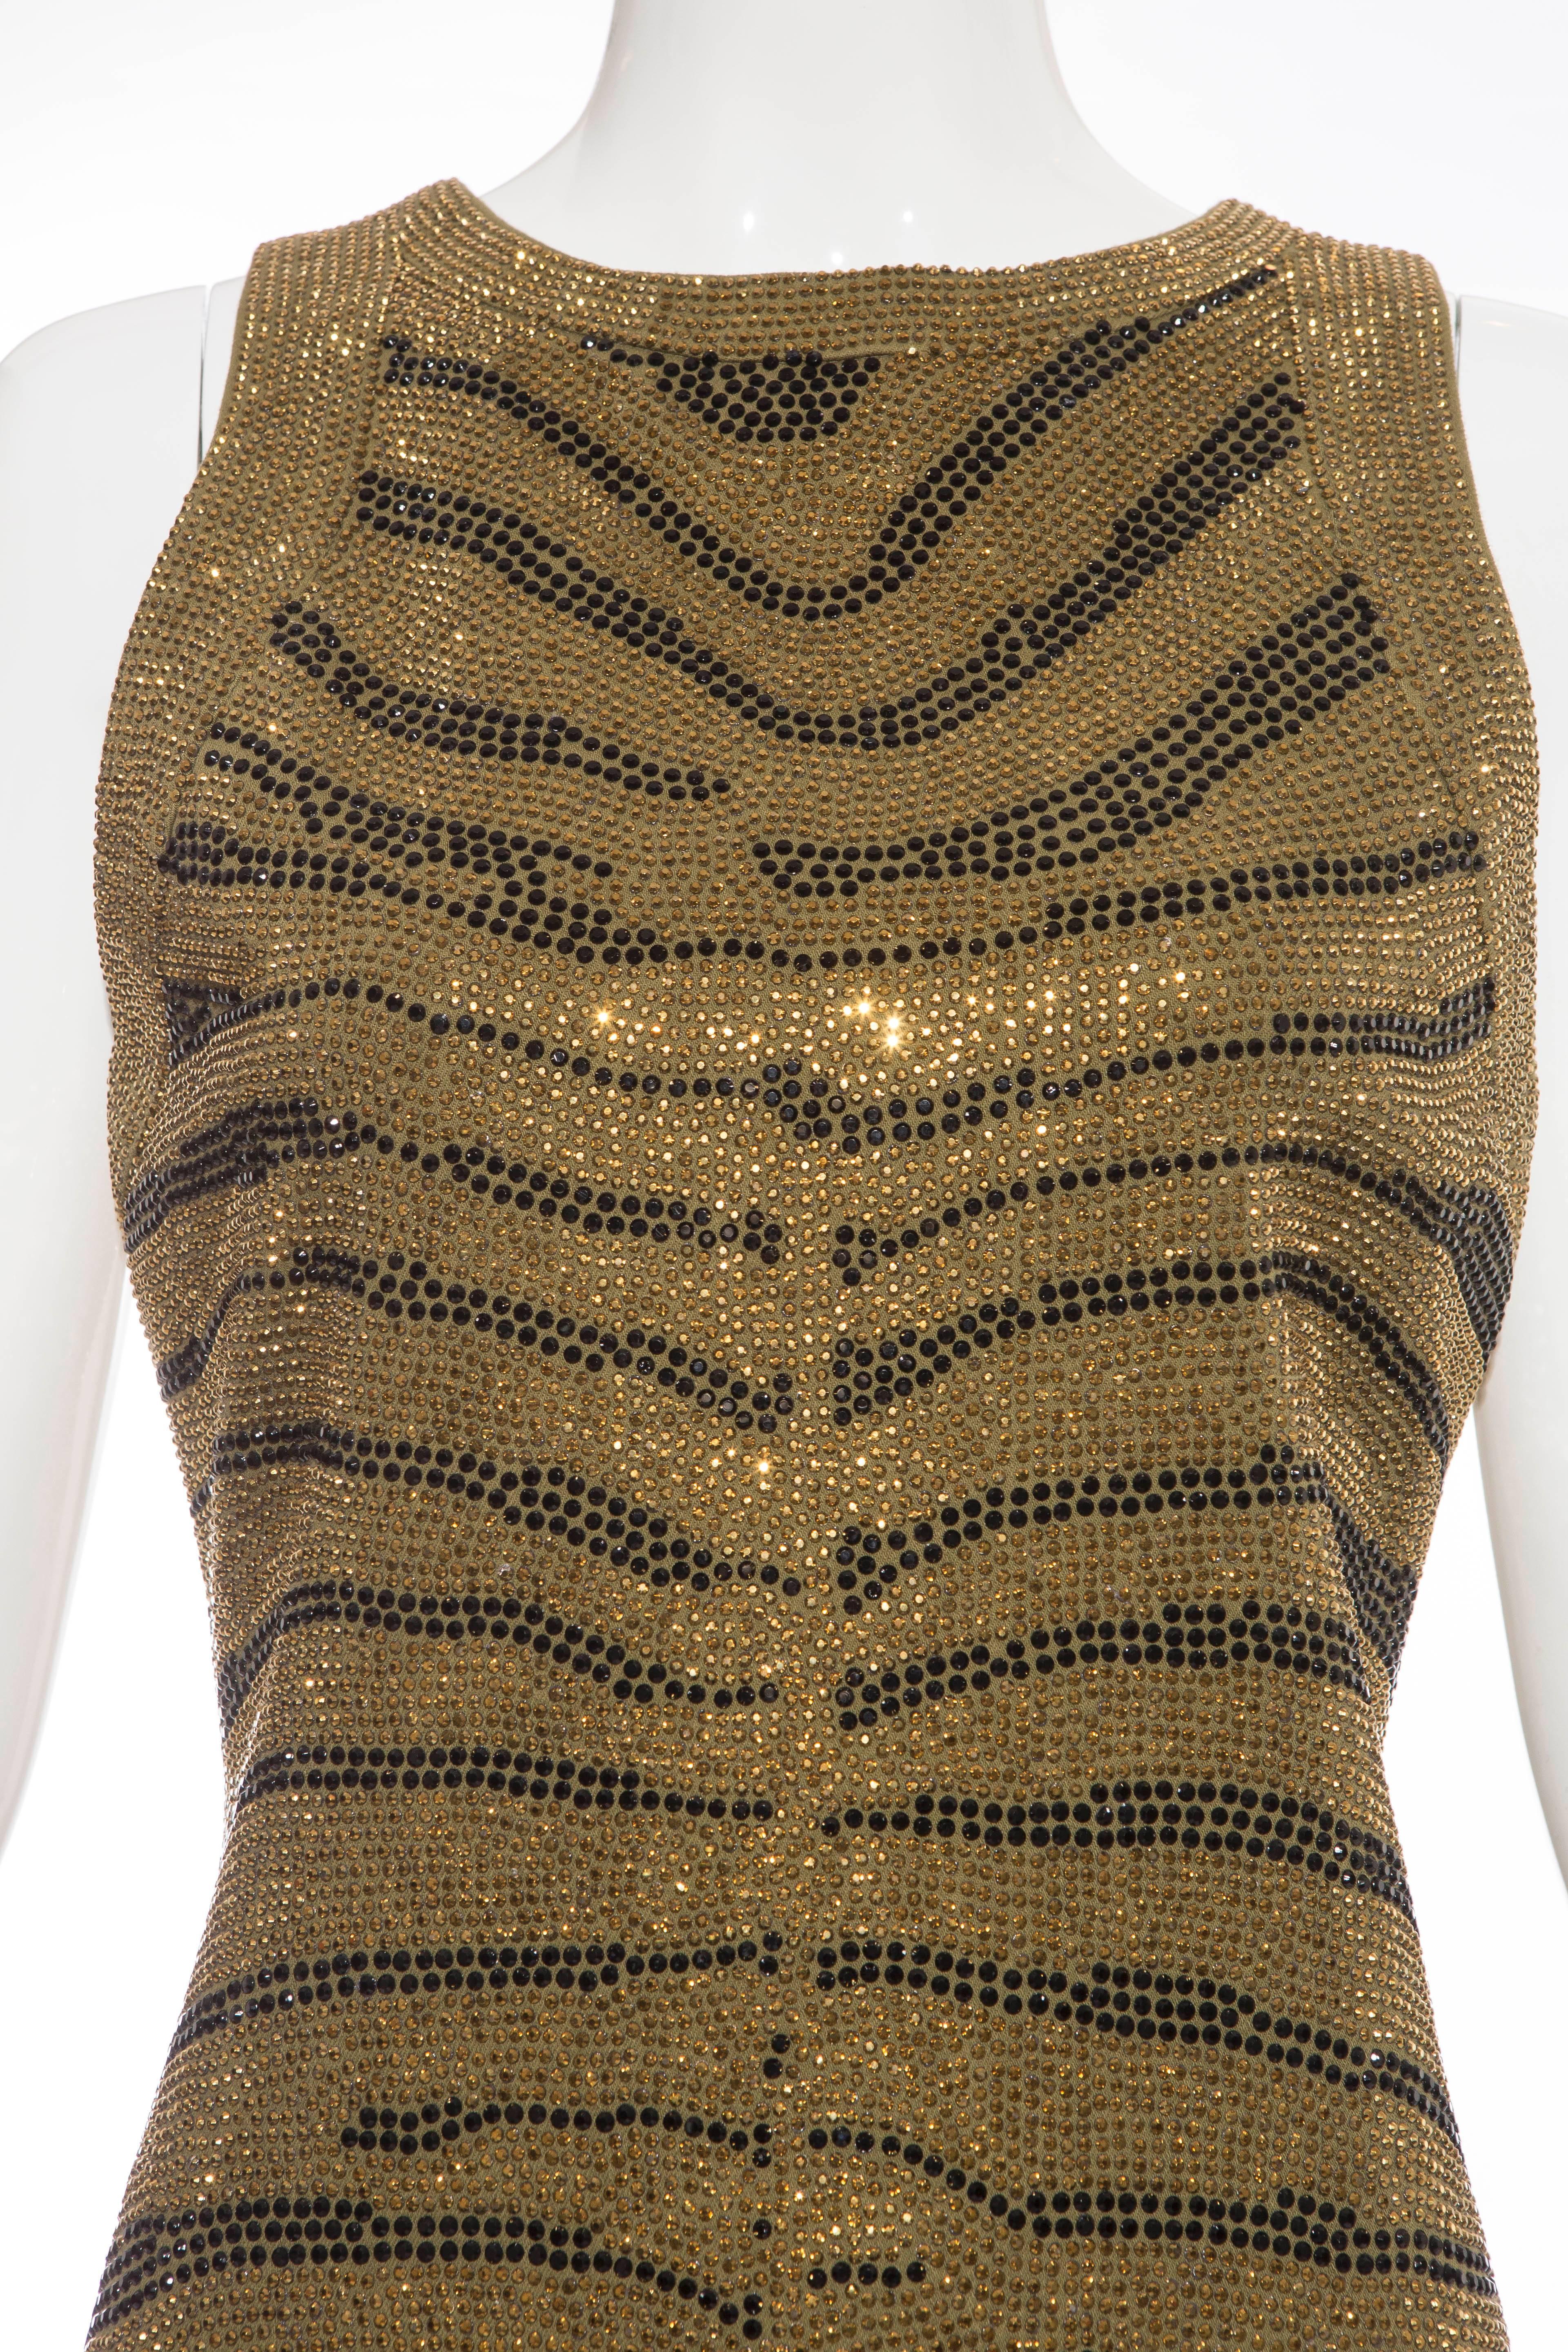 Black Balmain Runway Gold Zebra Print Crystal Embellished Evening Dress, Pre-Fall 2014 For Sale